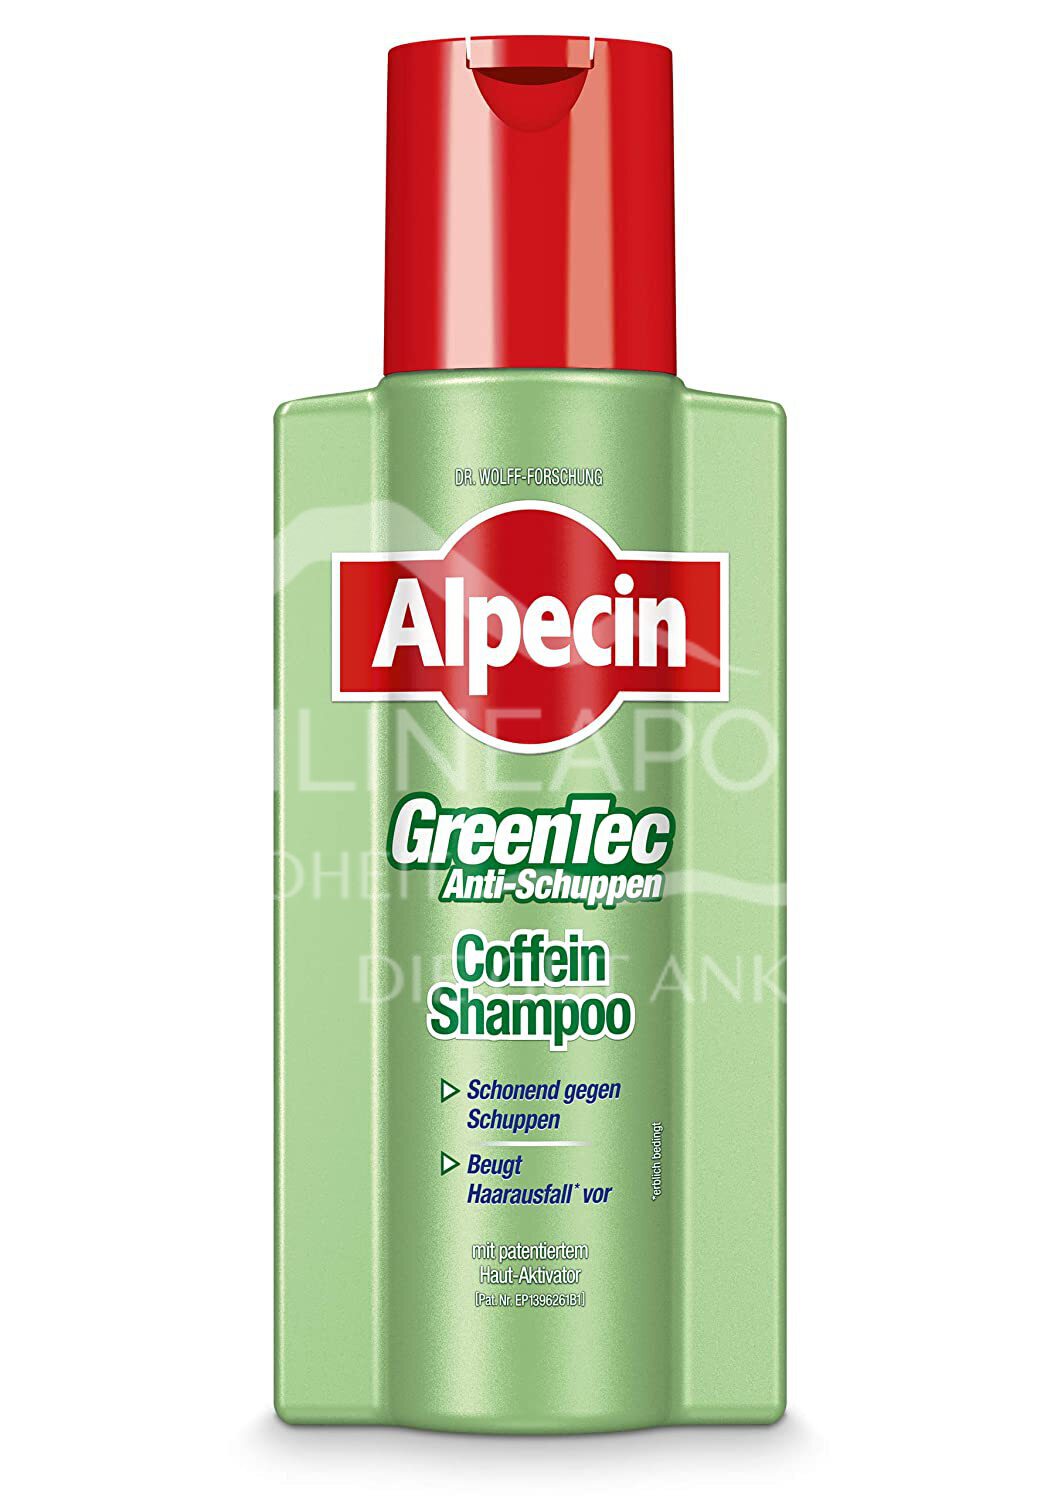 Alpecin GreenTec Anti-Schuppen Coffein Shampoo